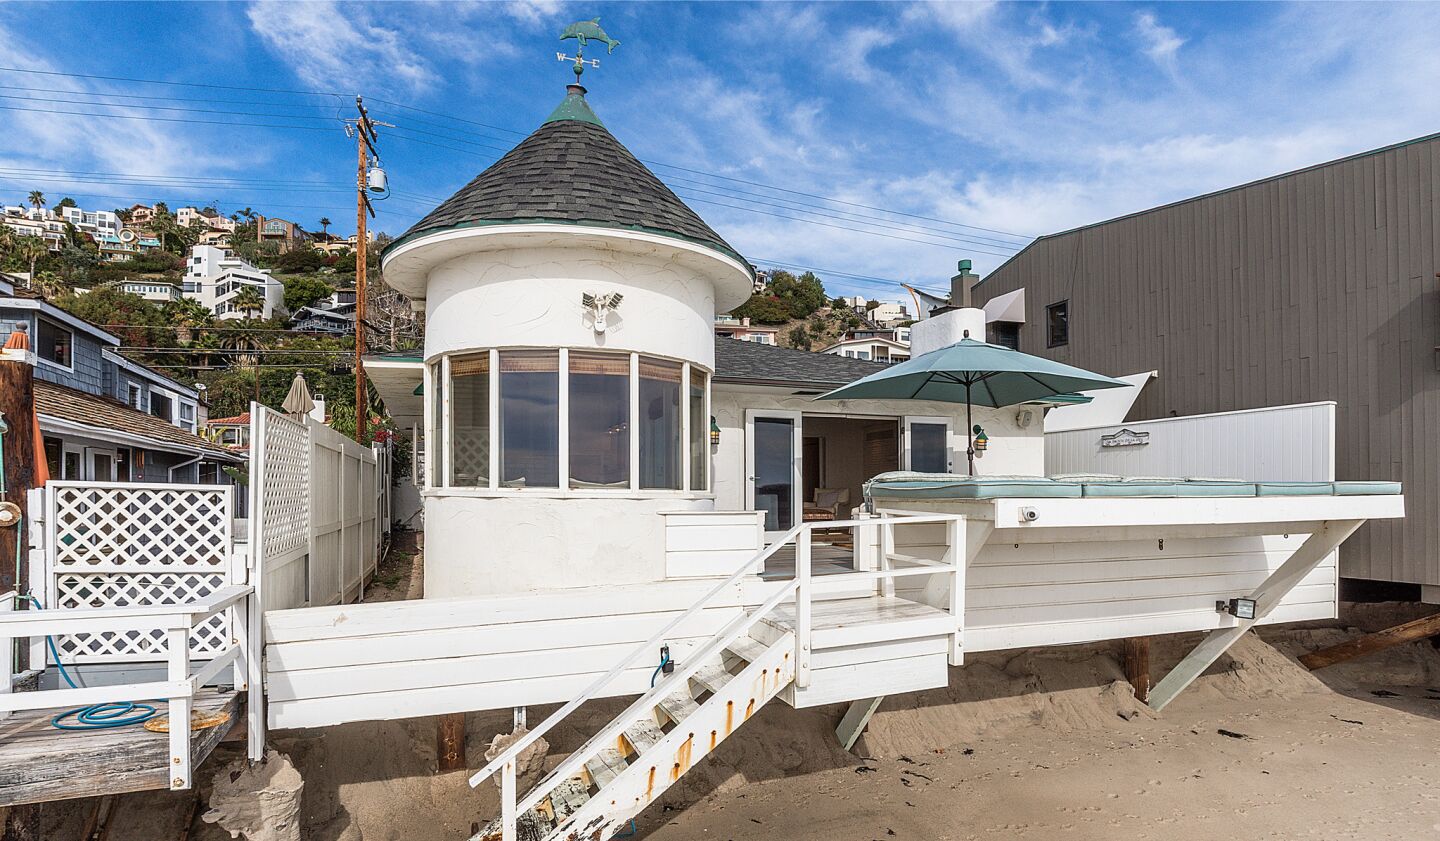 Songwriter-producer Glen Ballard has put his coastal cottage on the market in Malibu for $7.995 million.